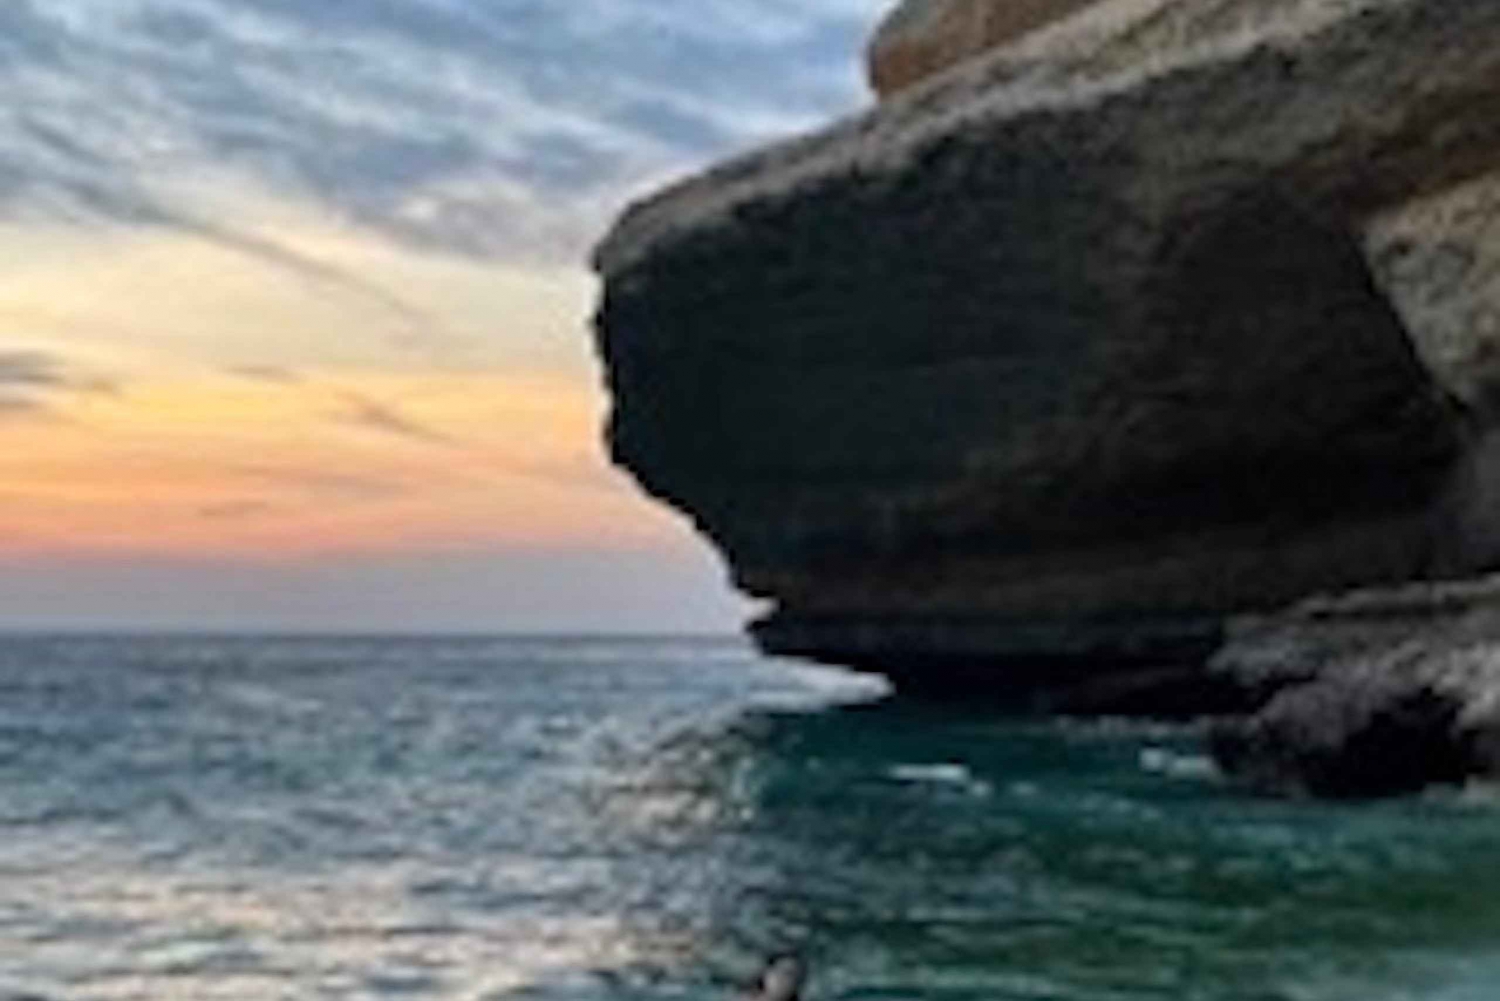 Schnorchelabenteuer auf der Insel Al Fahal